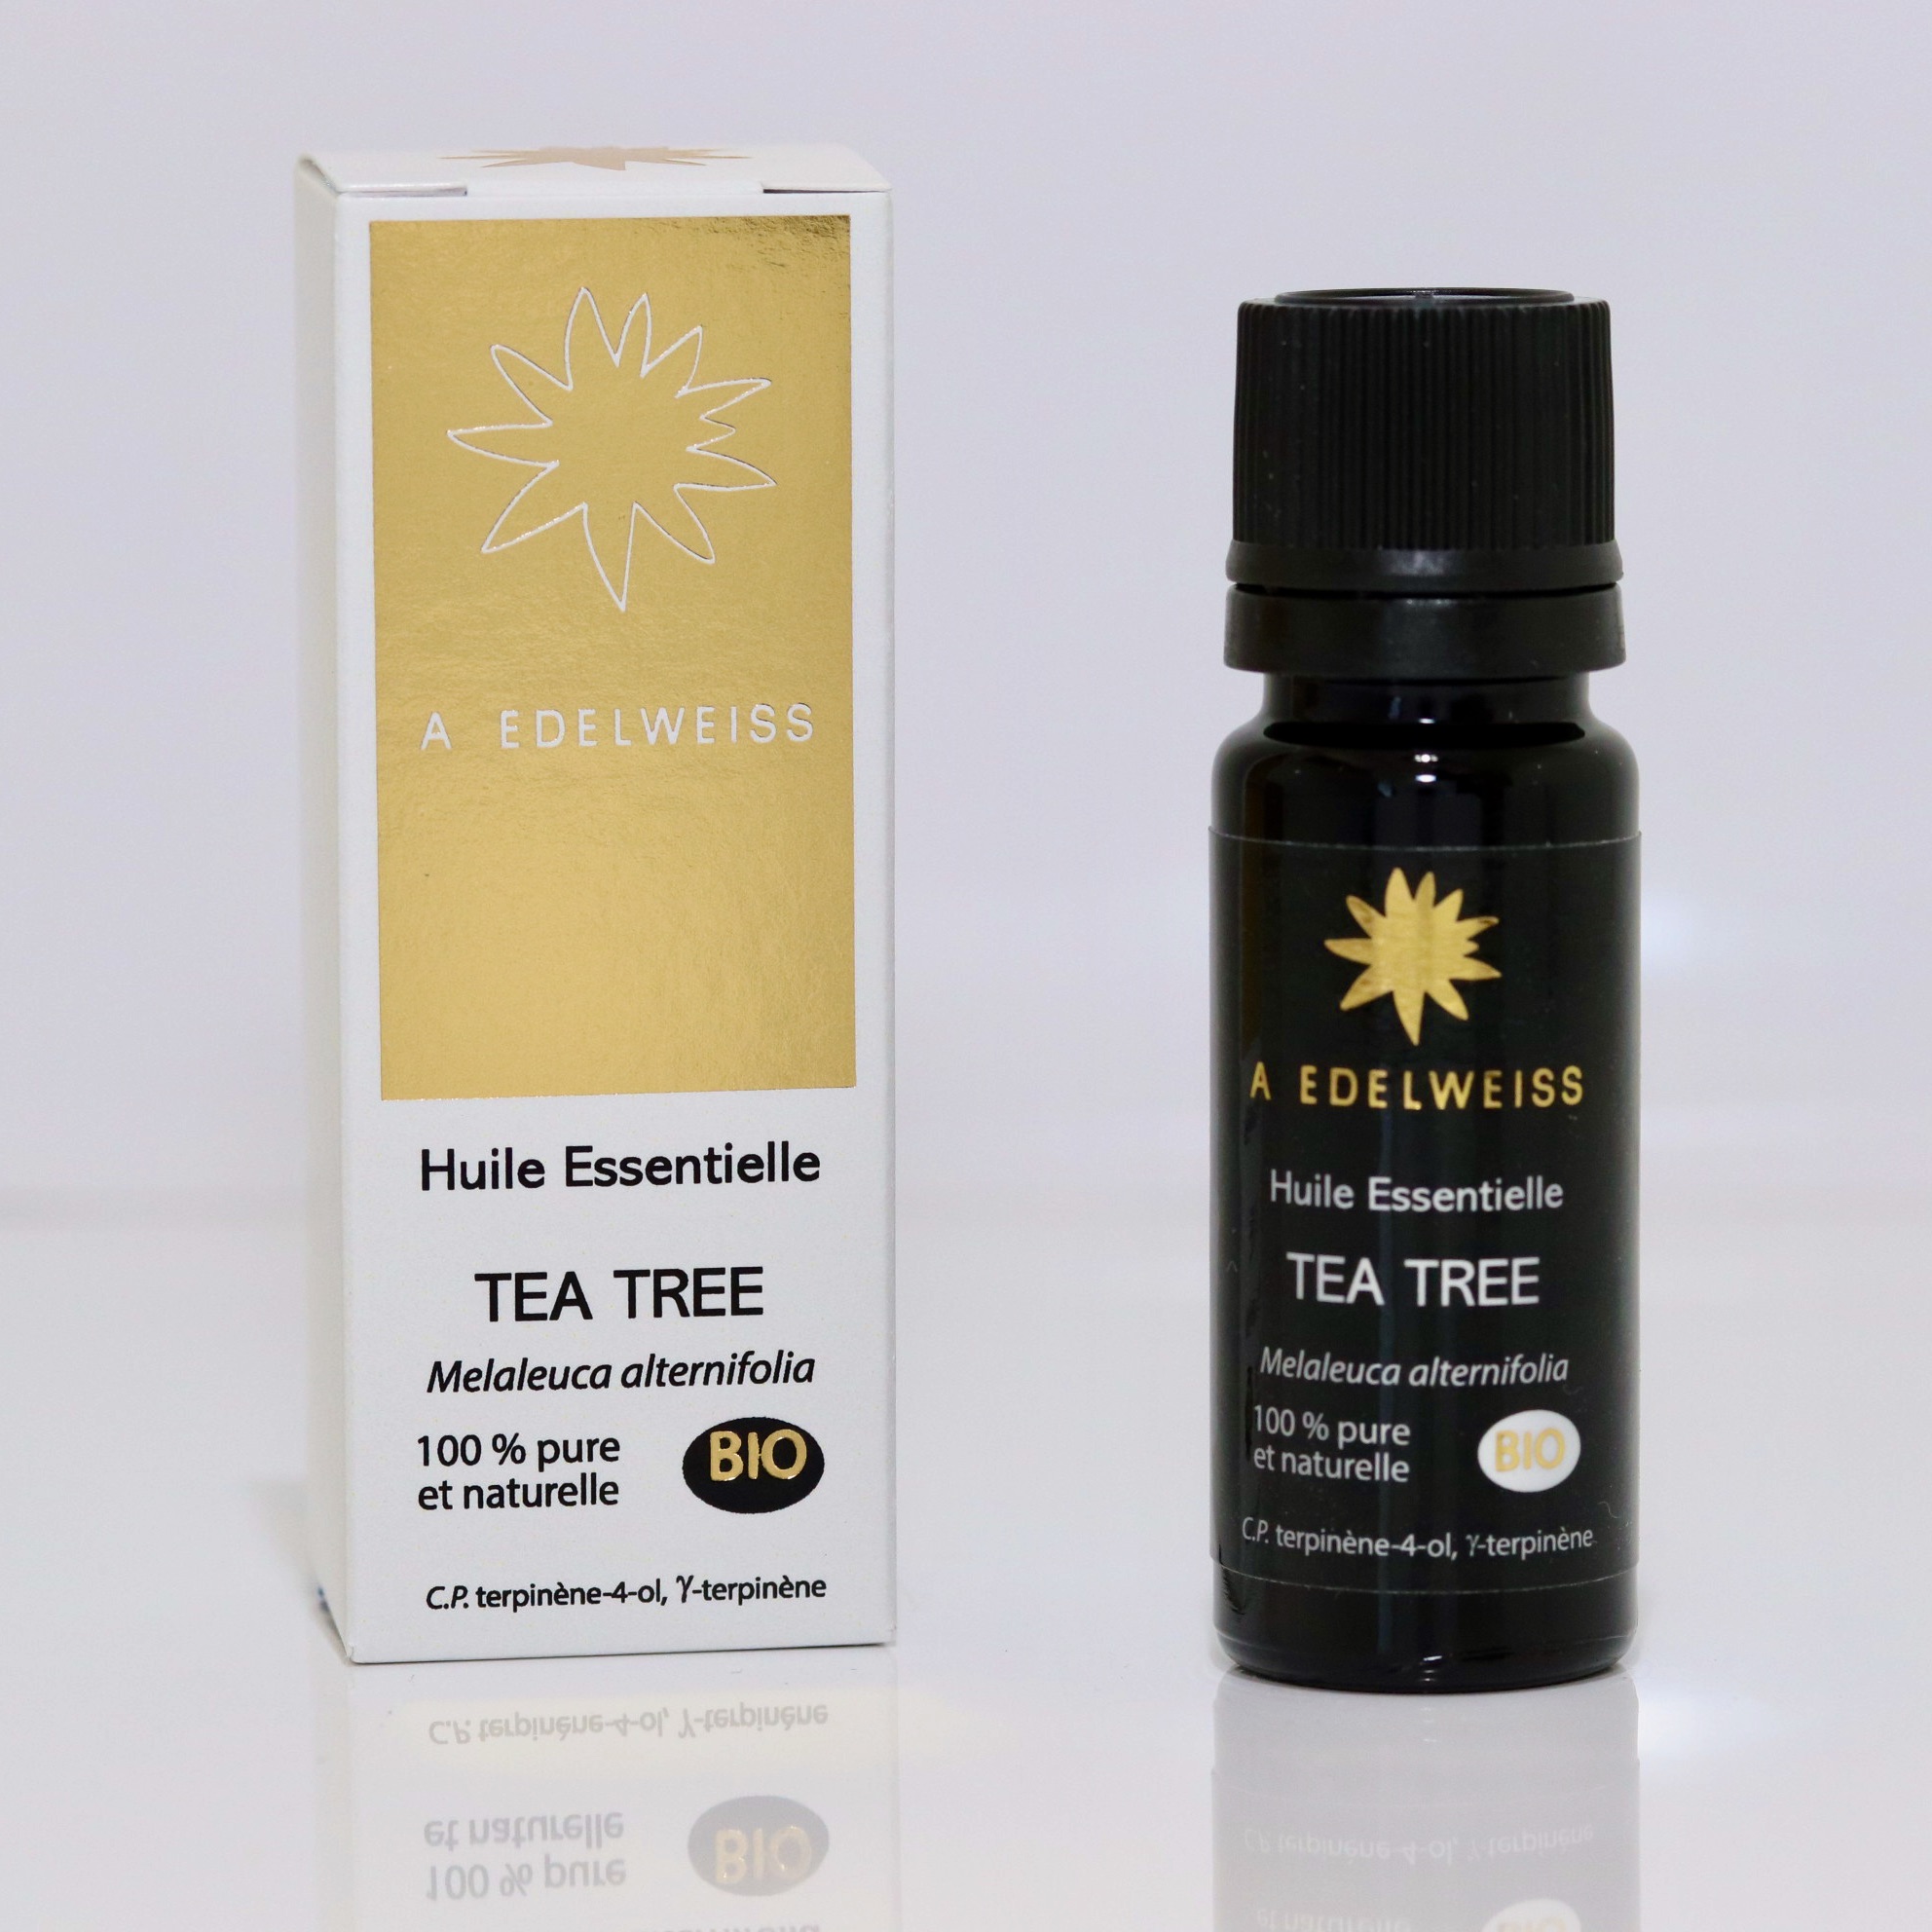 Huile essentielle biologique - Tea tree - 100% naturelle